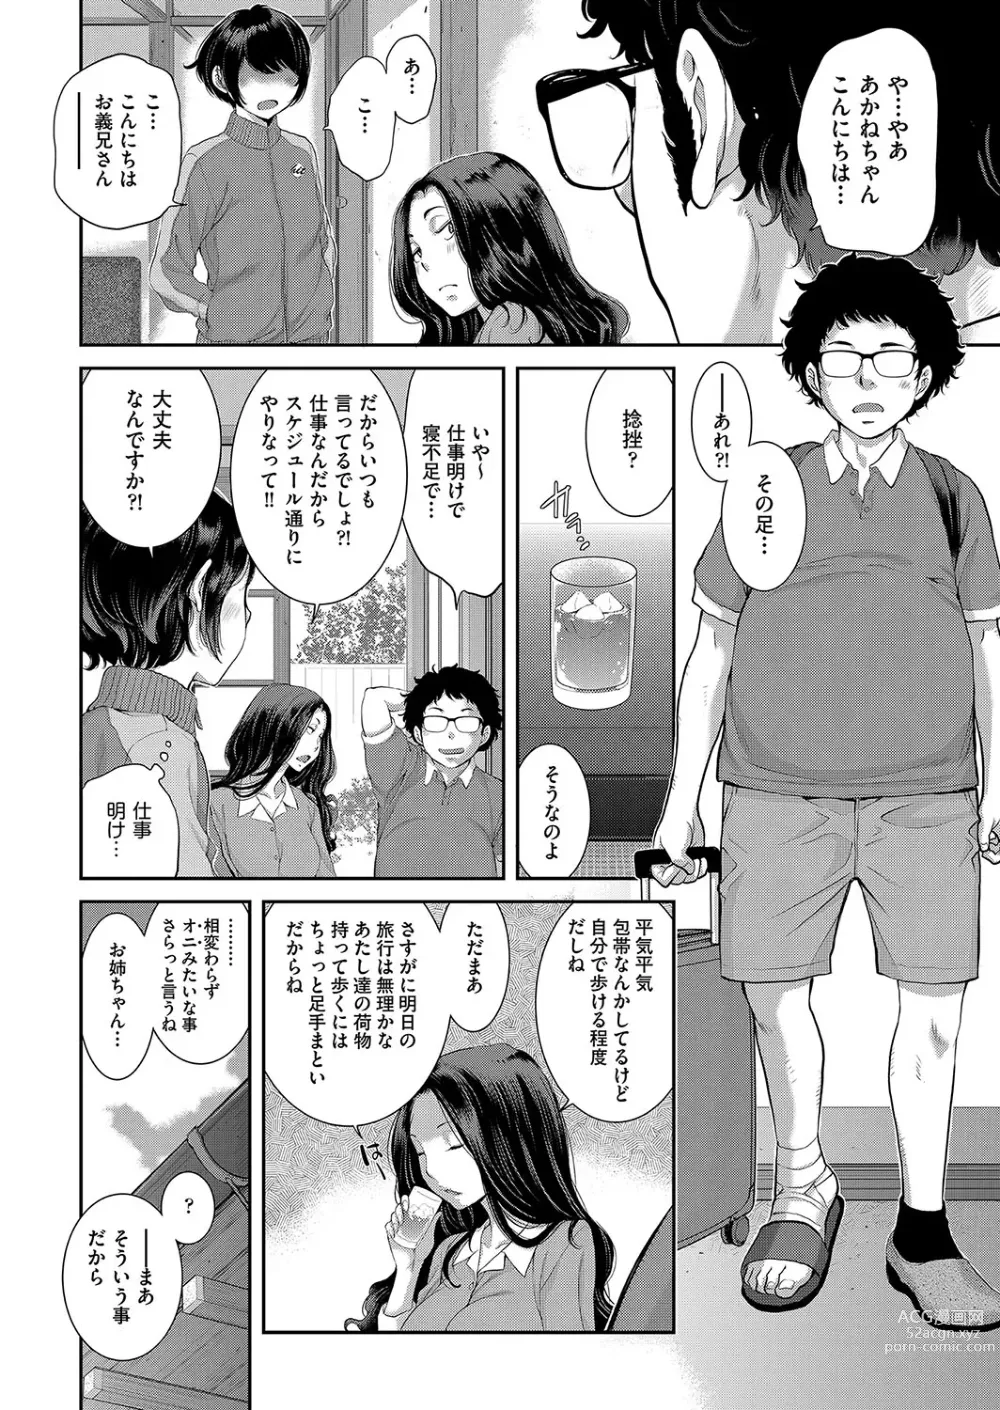 Page 9 of manga Maid Kitan - Maid Misteryous Story